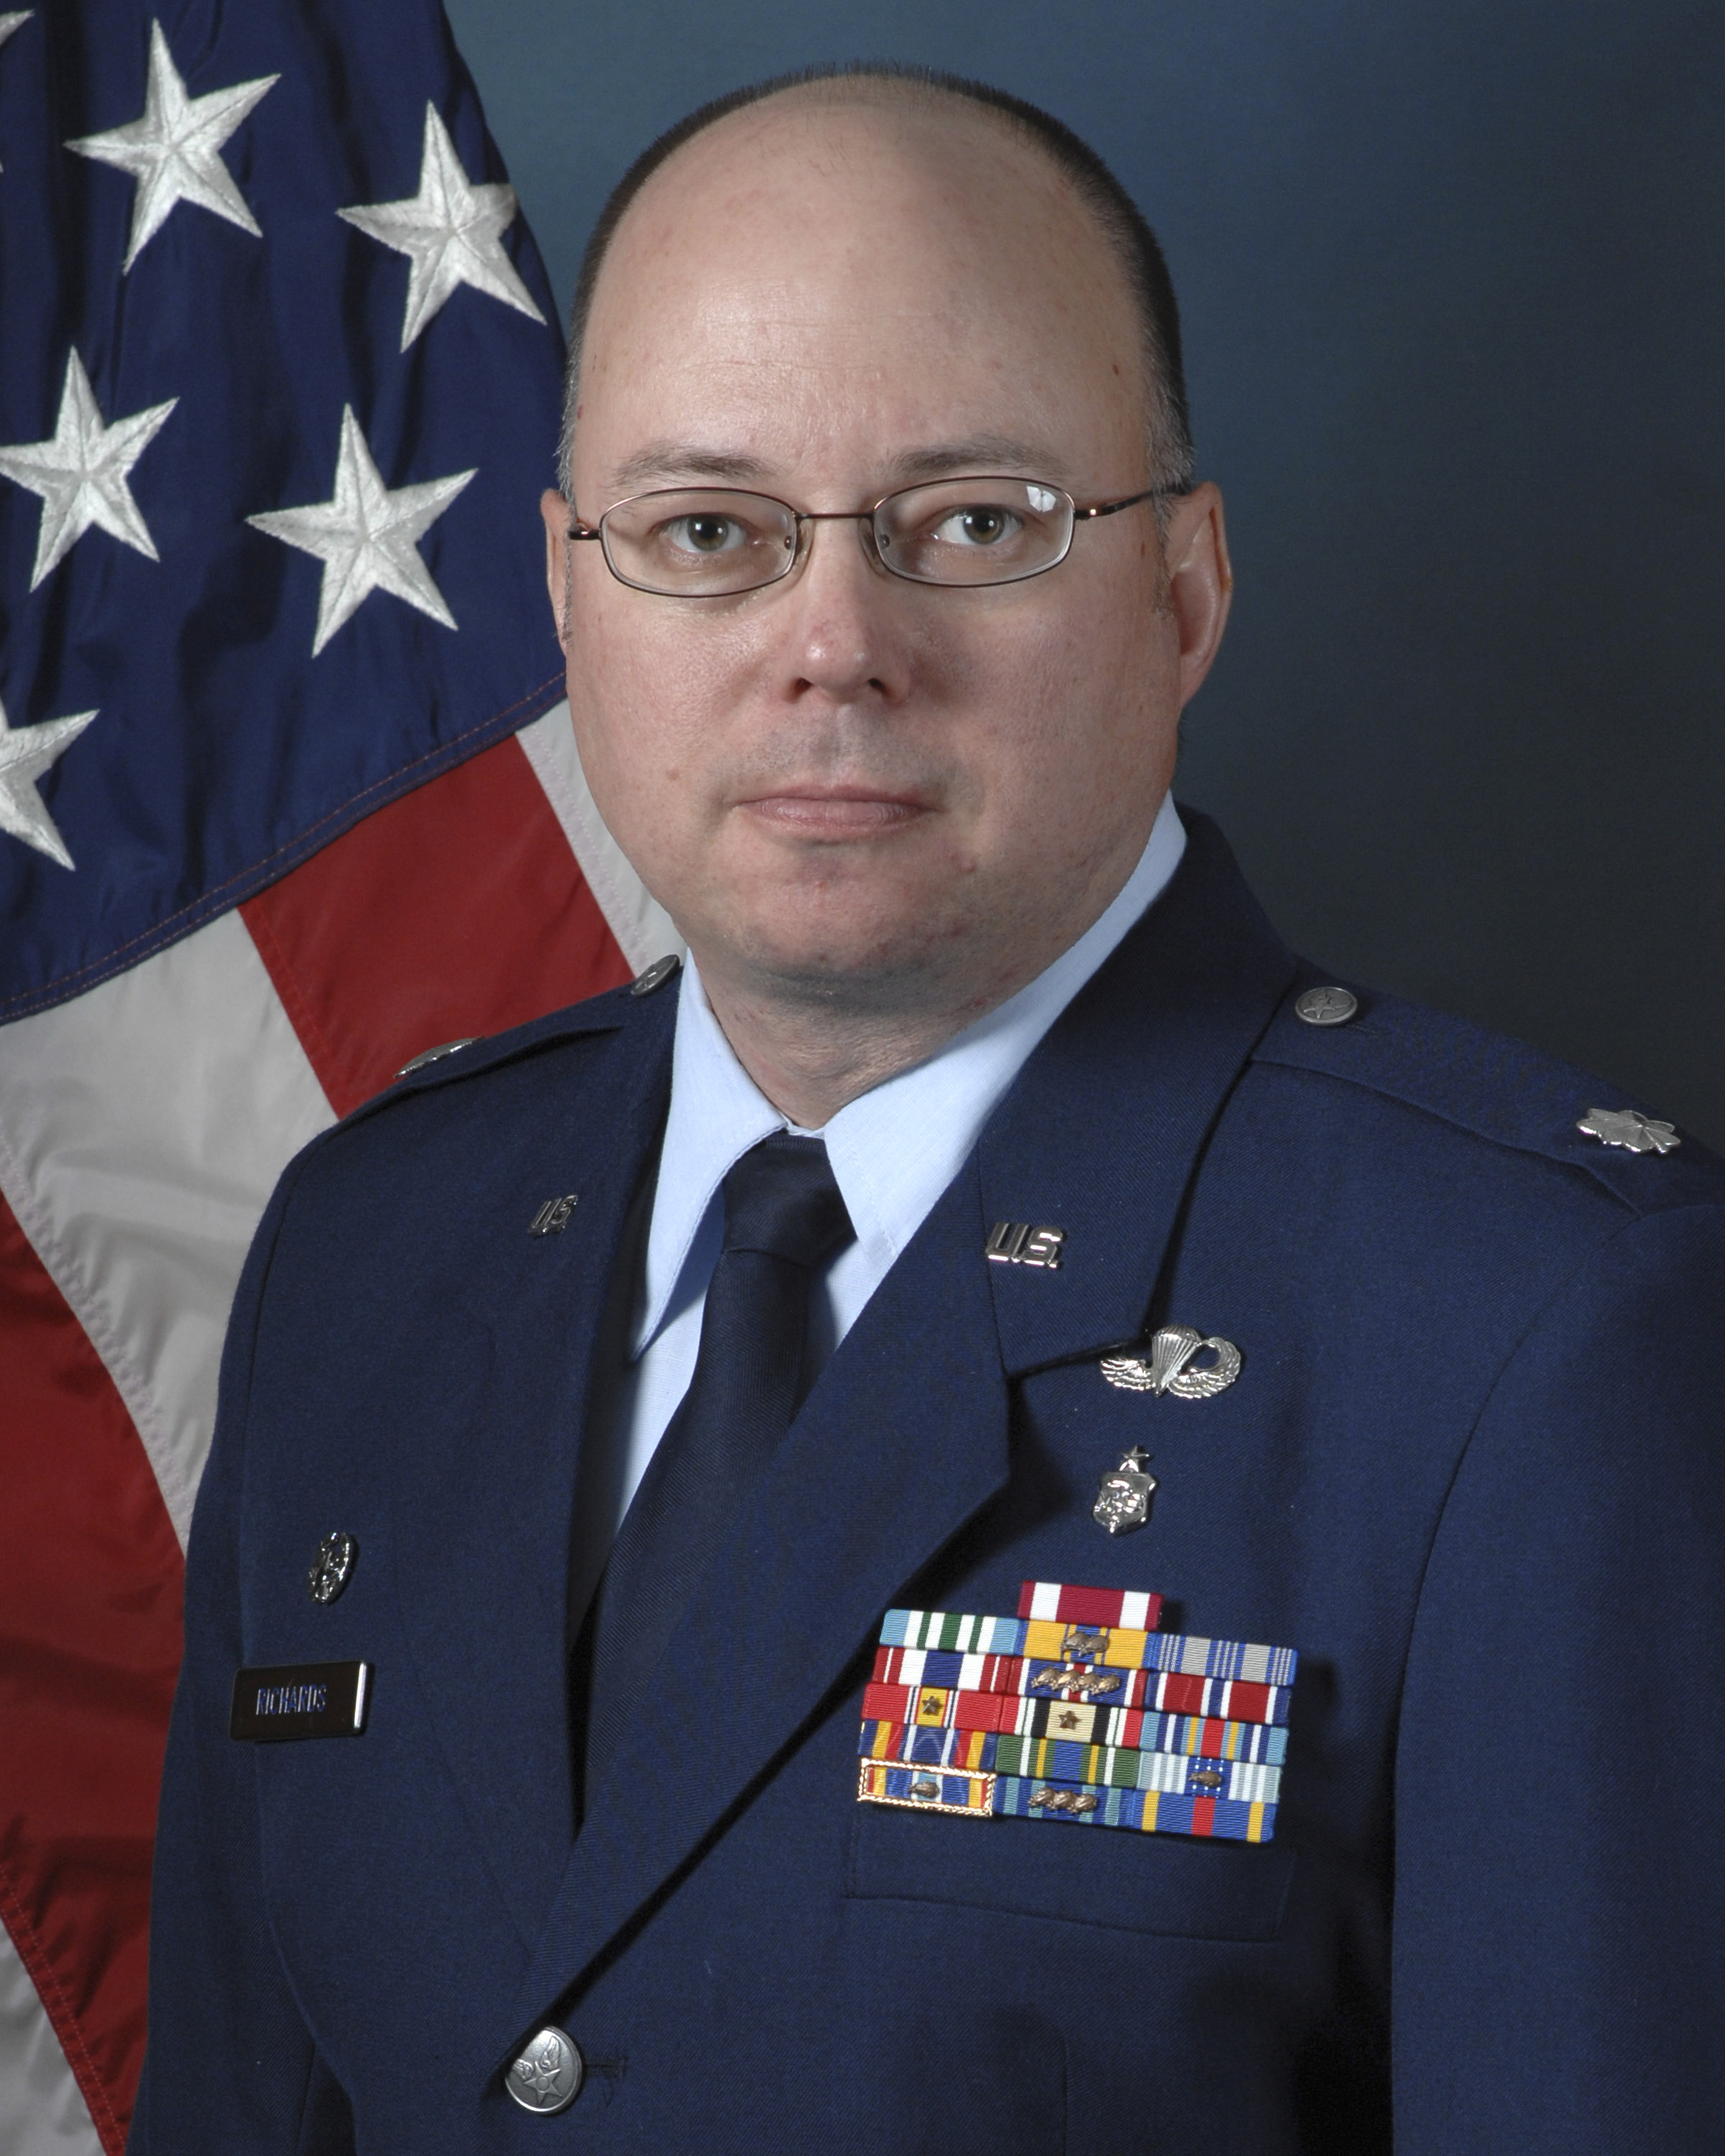 Lt. Col. <b>Jonathan Richards</b>, 39 MDSS: Orange tree leadership - 130114-F-VO466-001